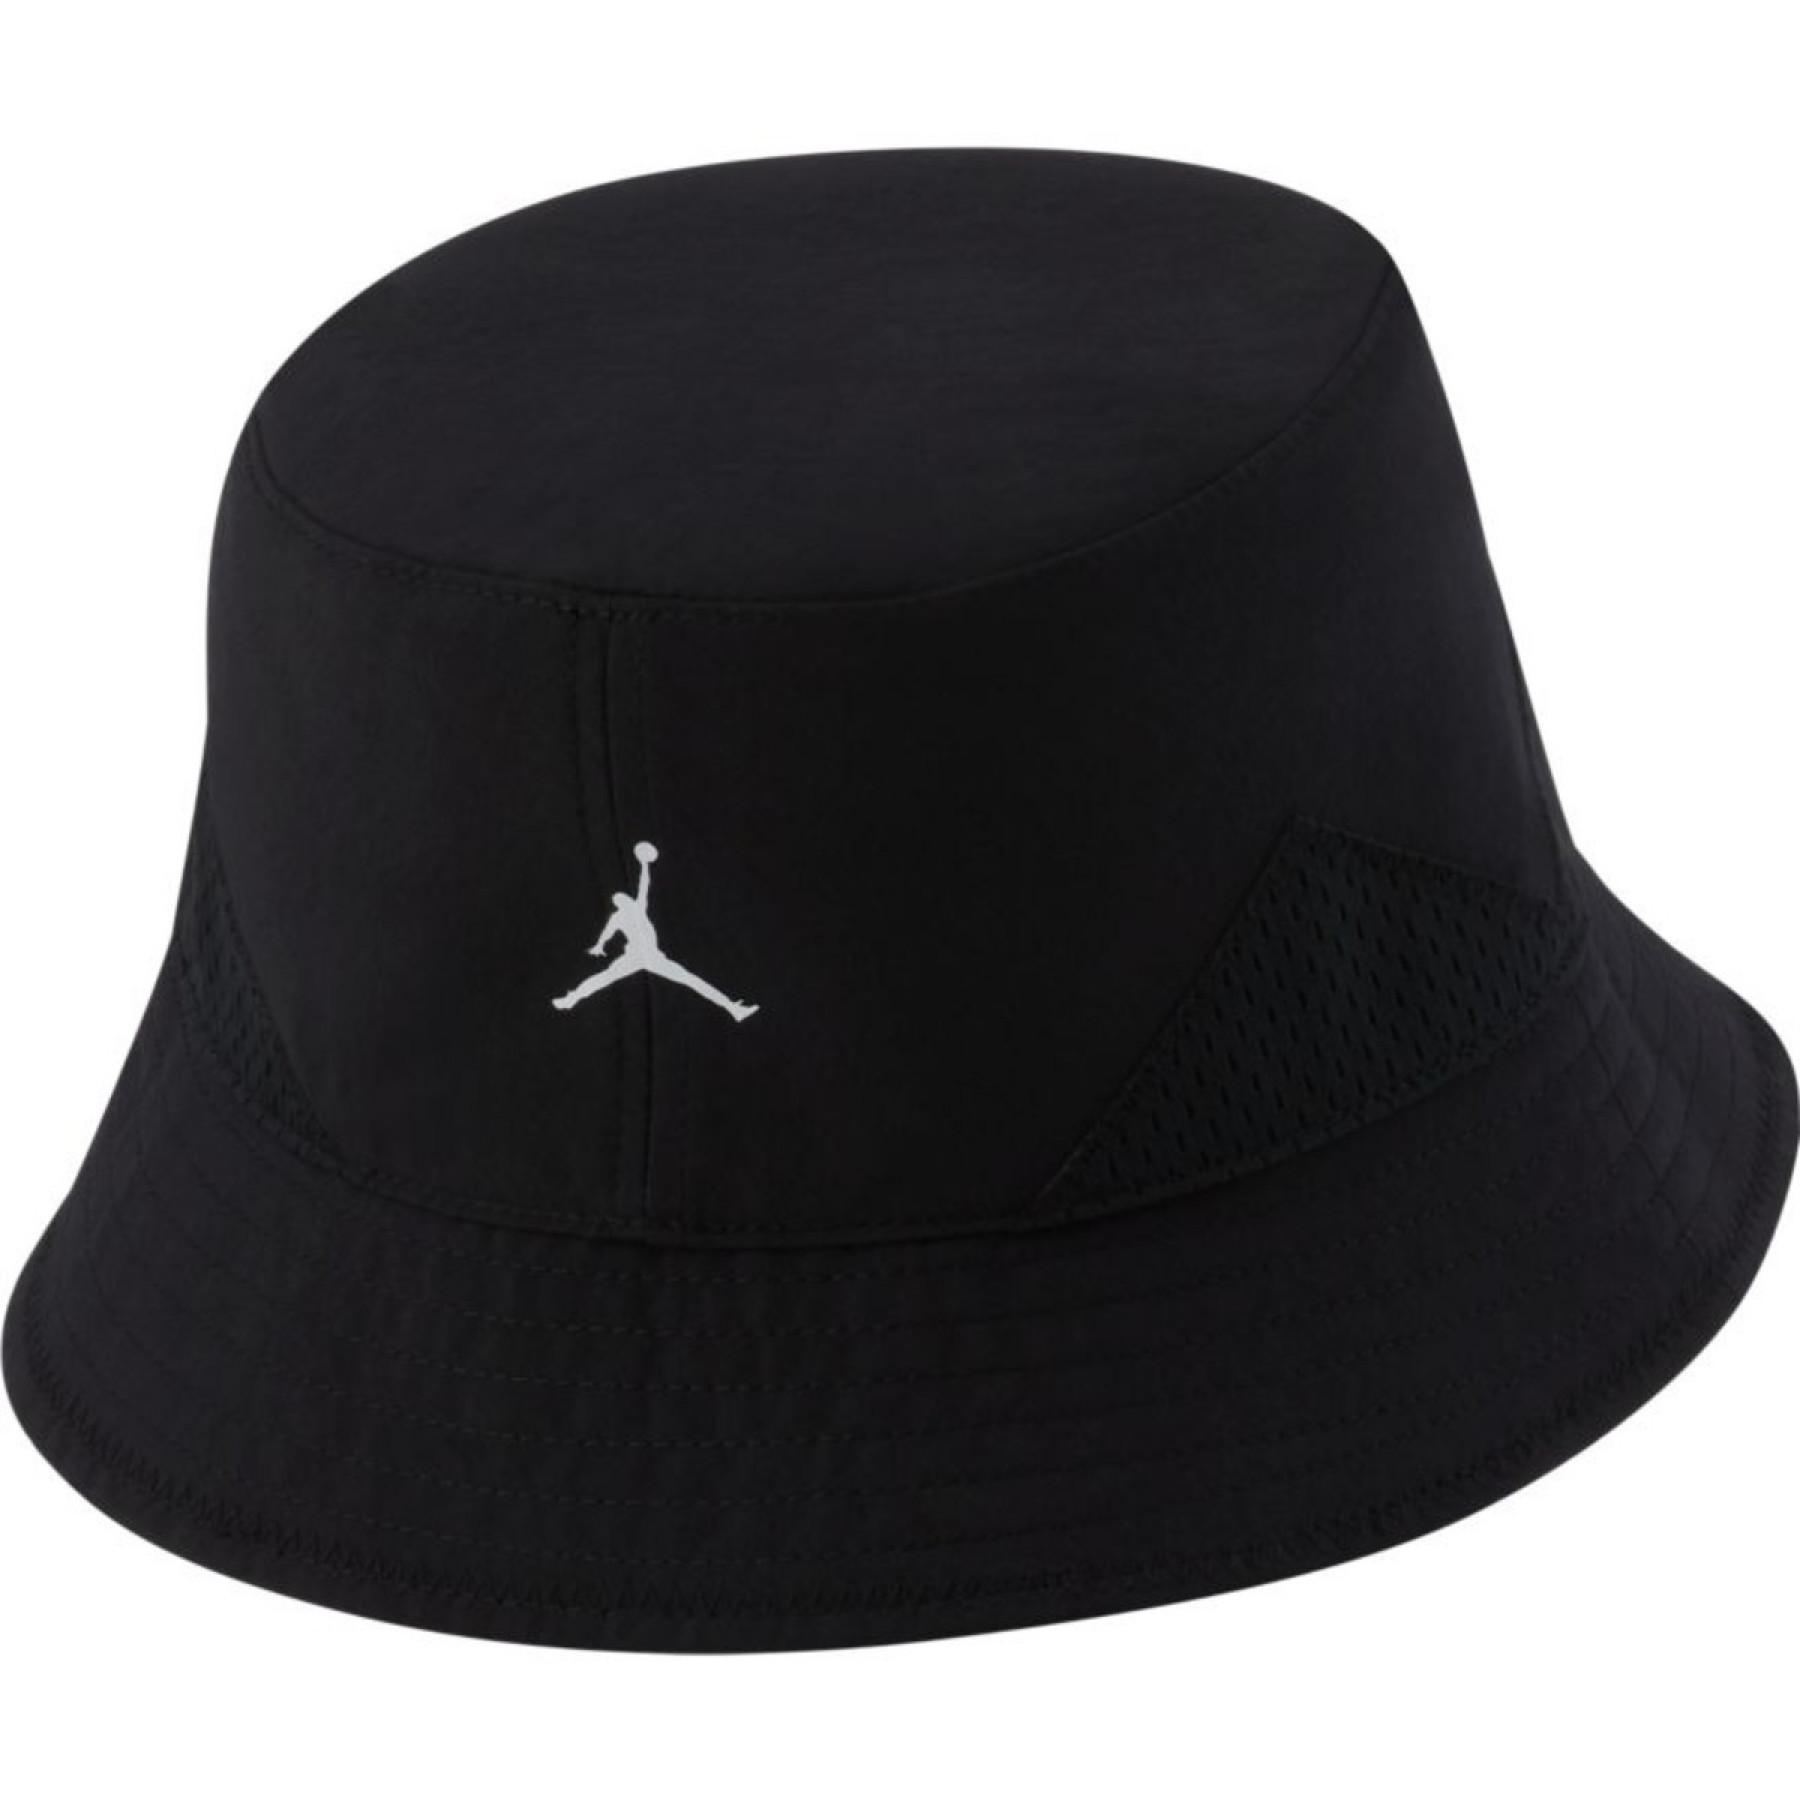 Bob Nike Jordan x Zion